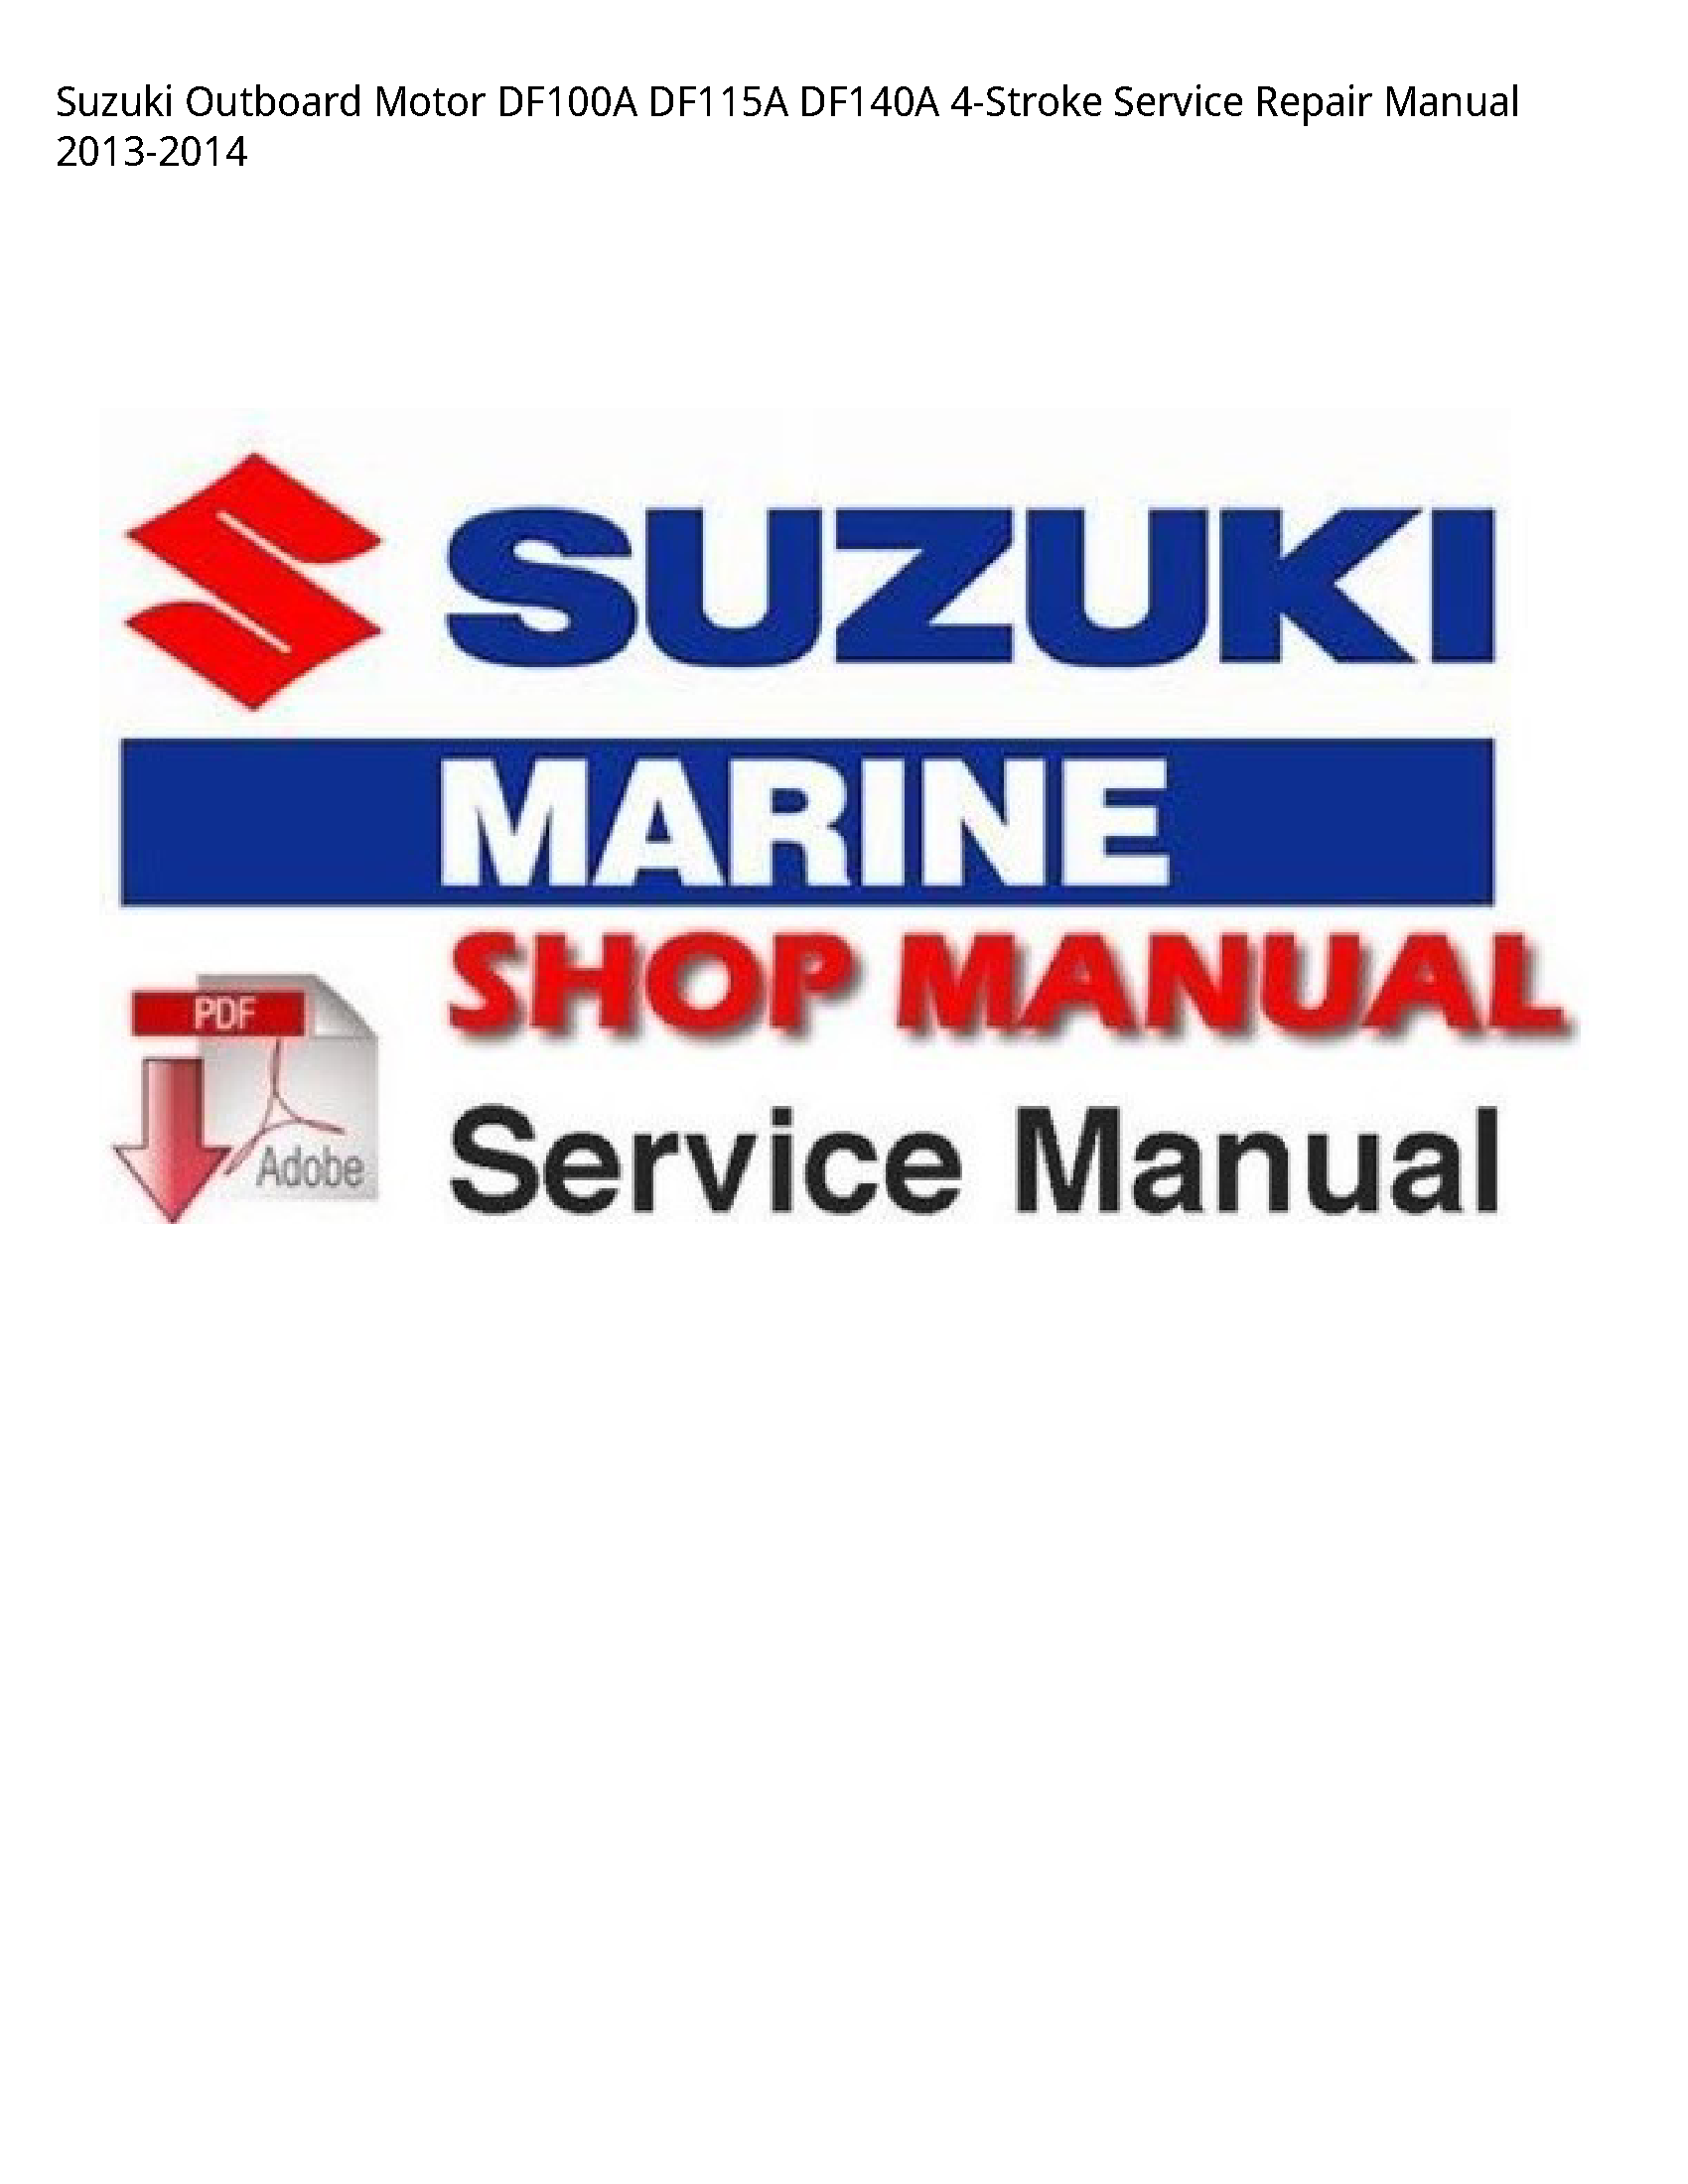 Suzuki DF100A Outboard Motor manual